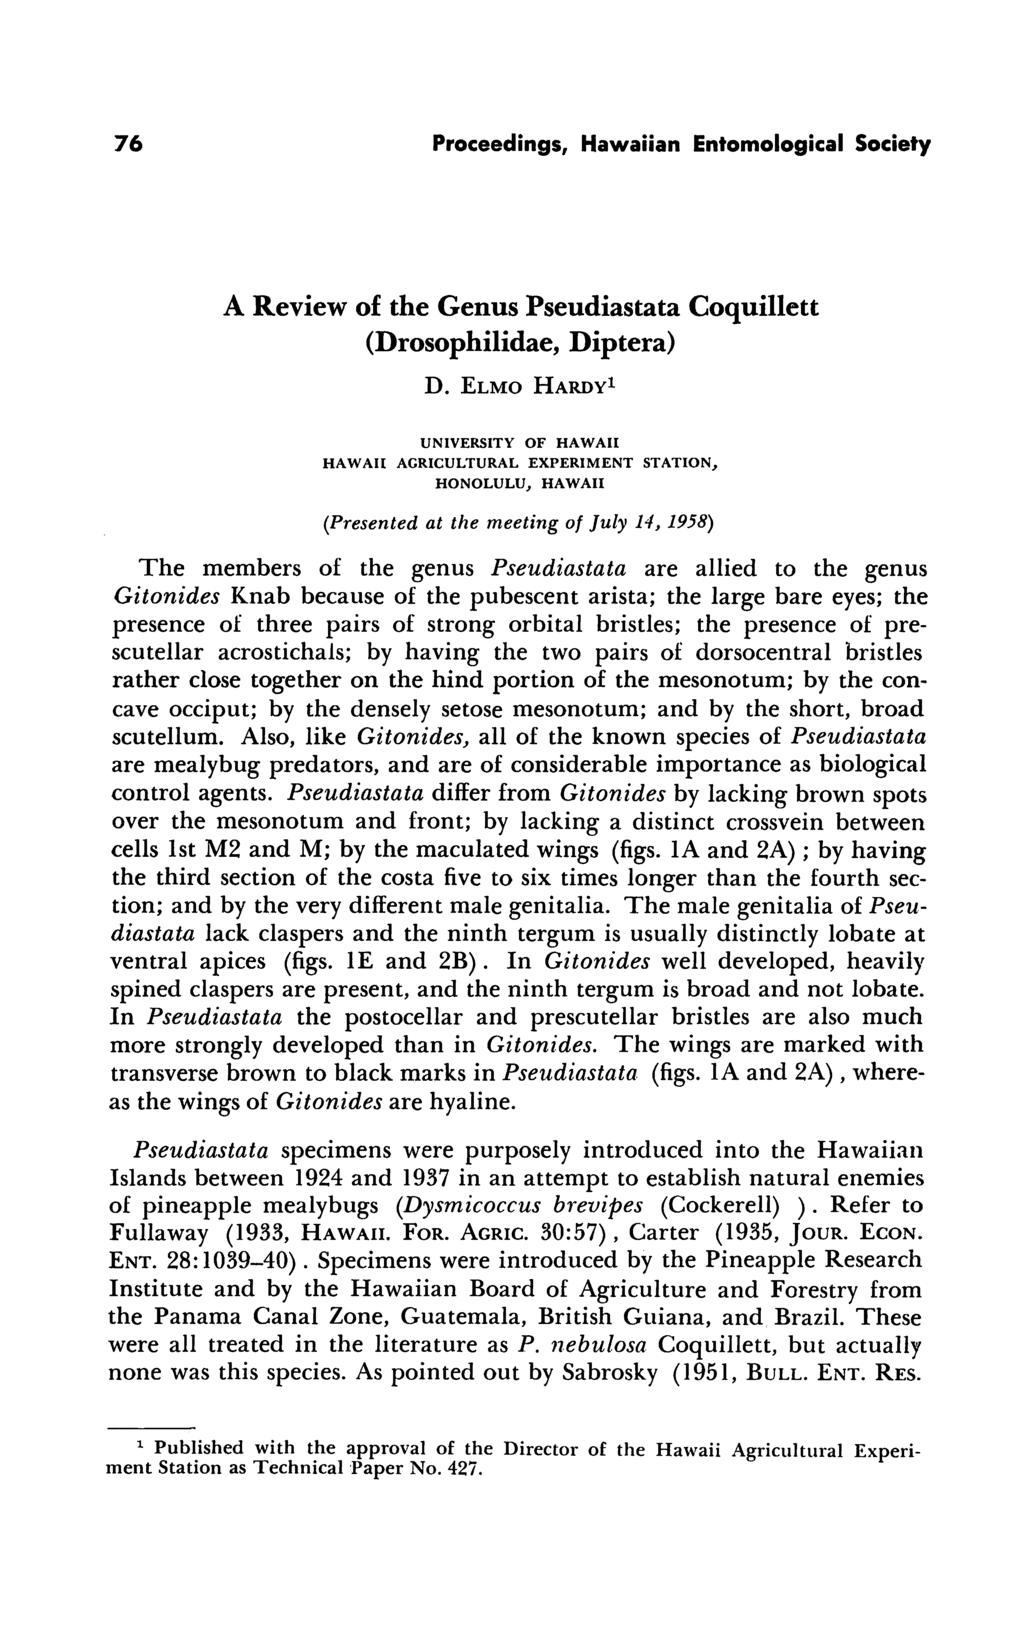 76 Proceedings, Hawaiian Entomological Society A Review of the Genus Pseudiastata Coquillett (Drosophilidae, Diptera) D.